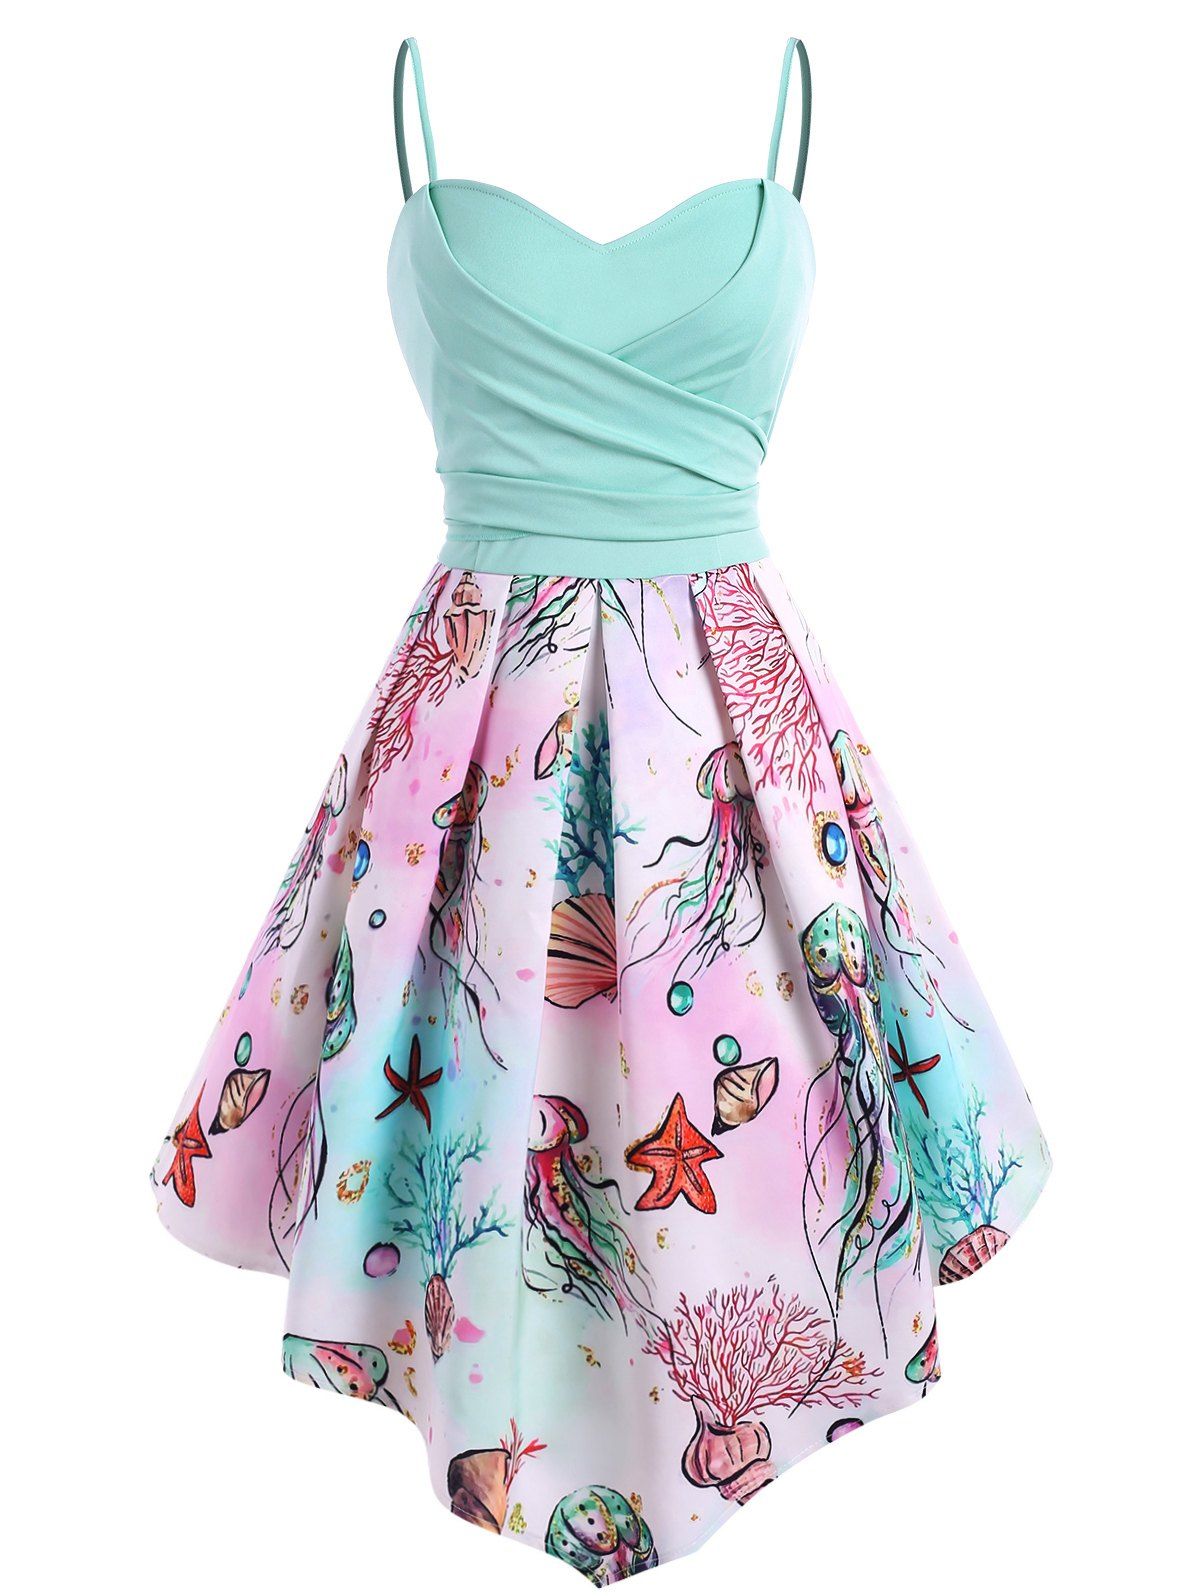 Summer Galaxy Marine Print Criss Cross Asymmetrical Dress - multicolor L